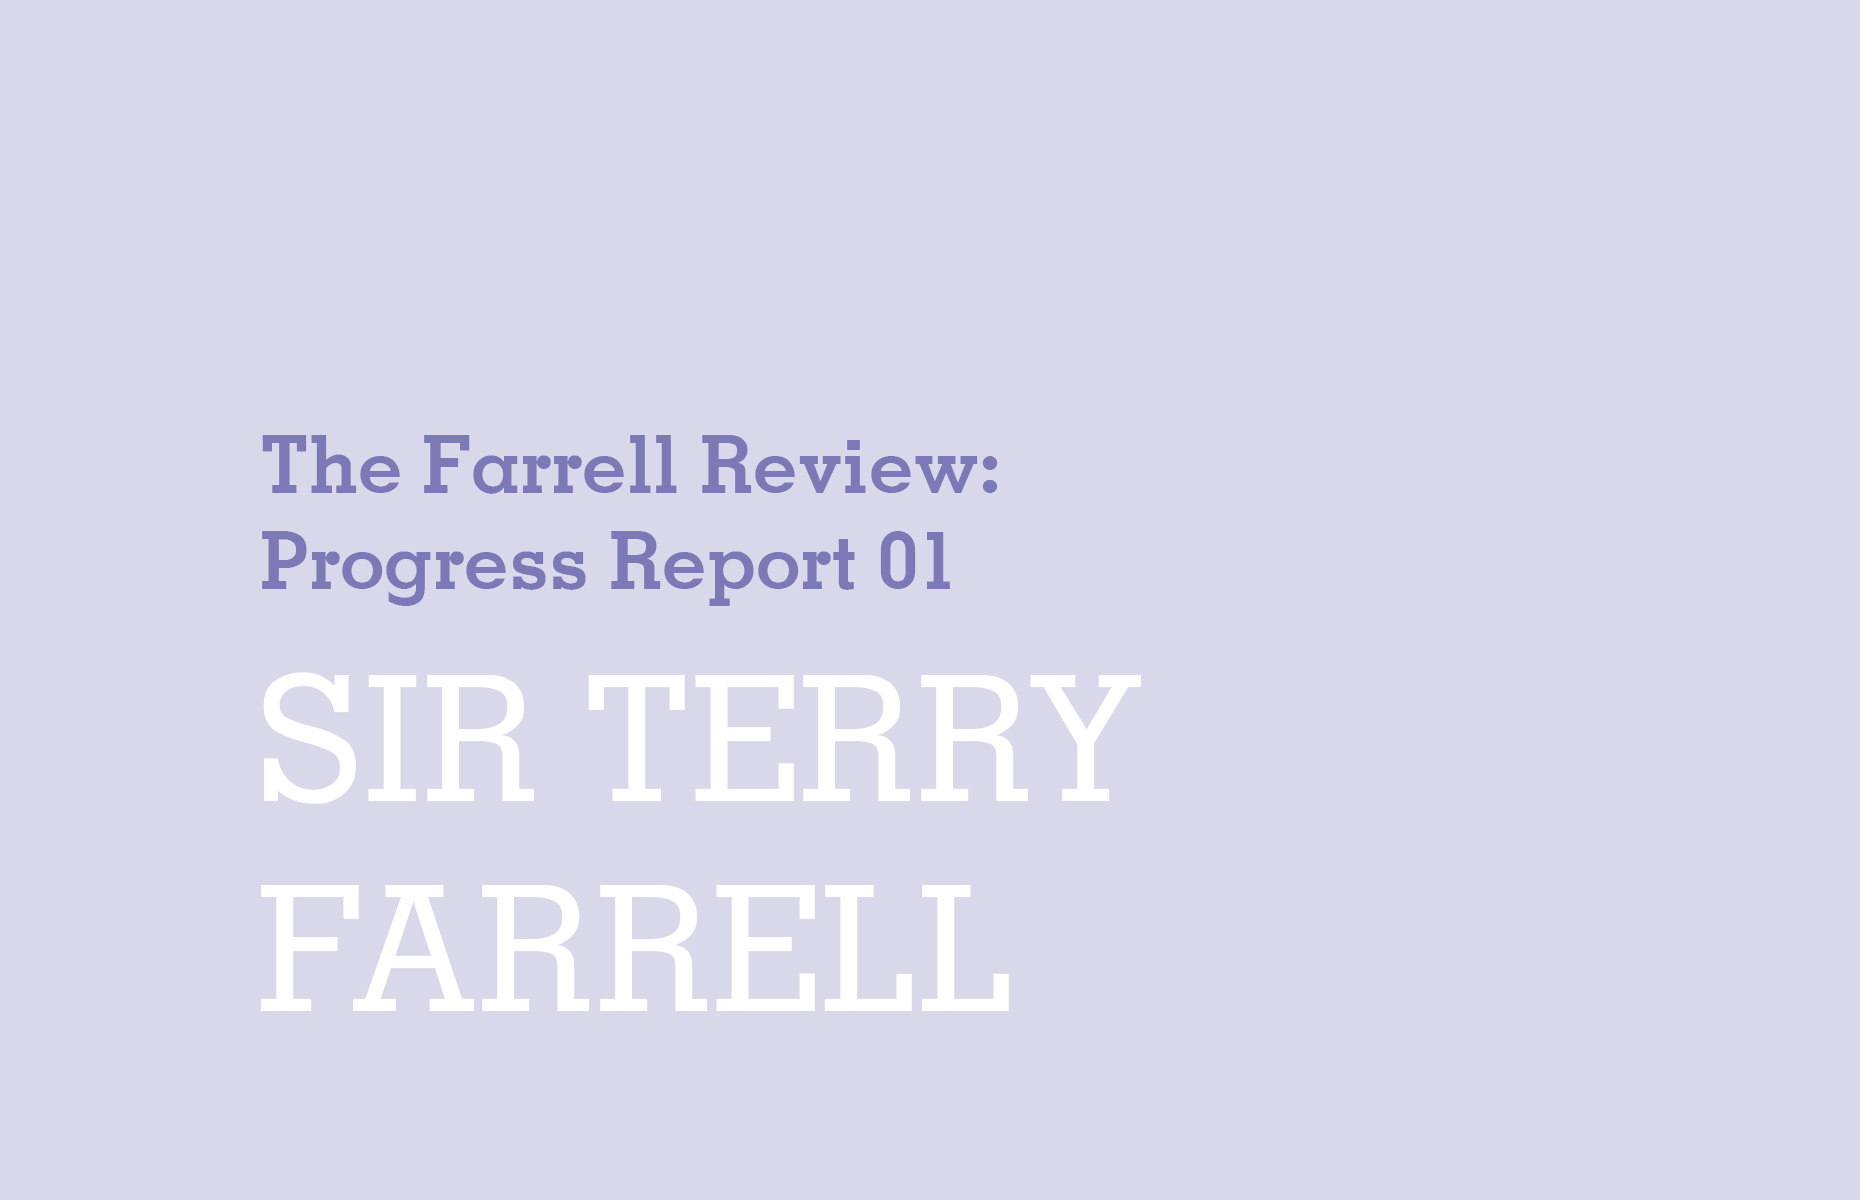 The Farrell Review: Progress Report 01